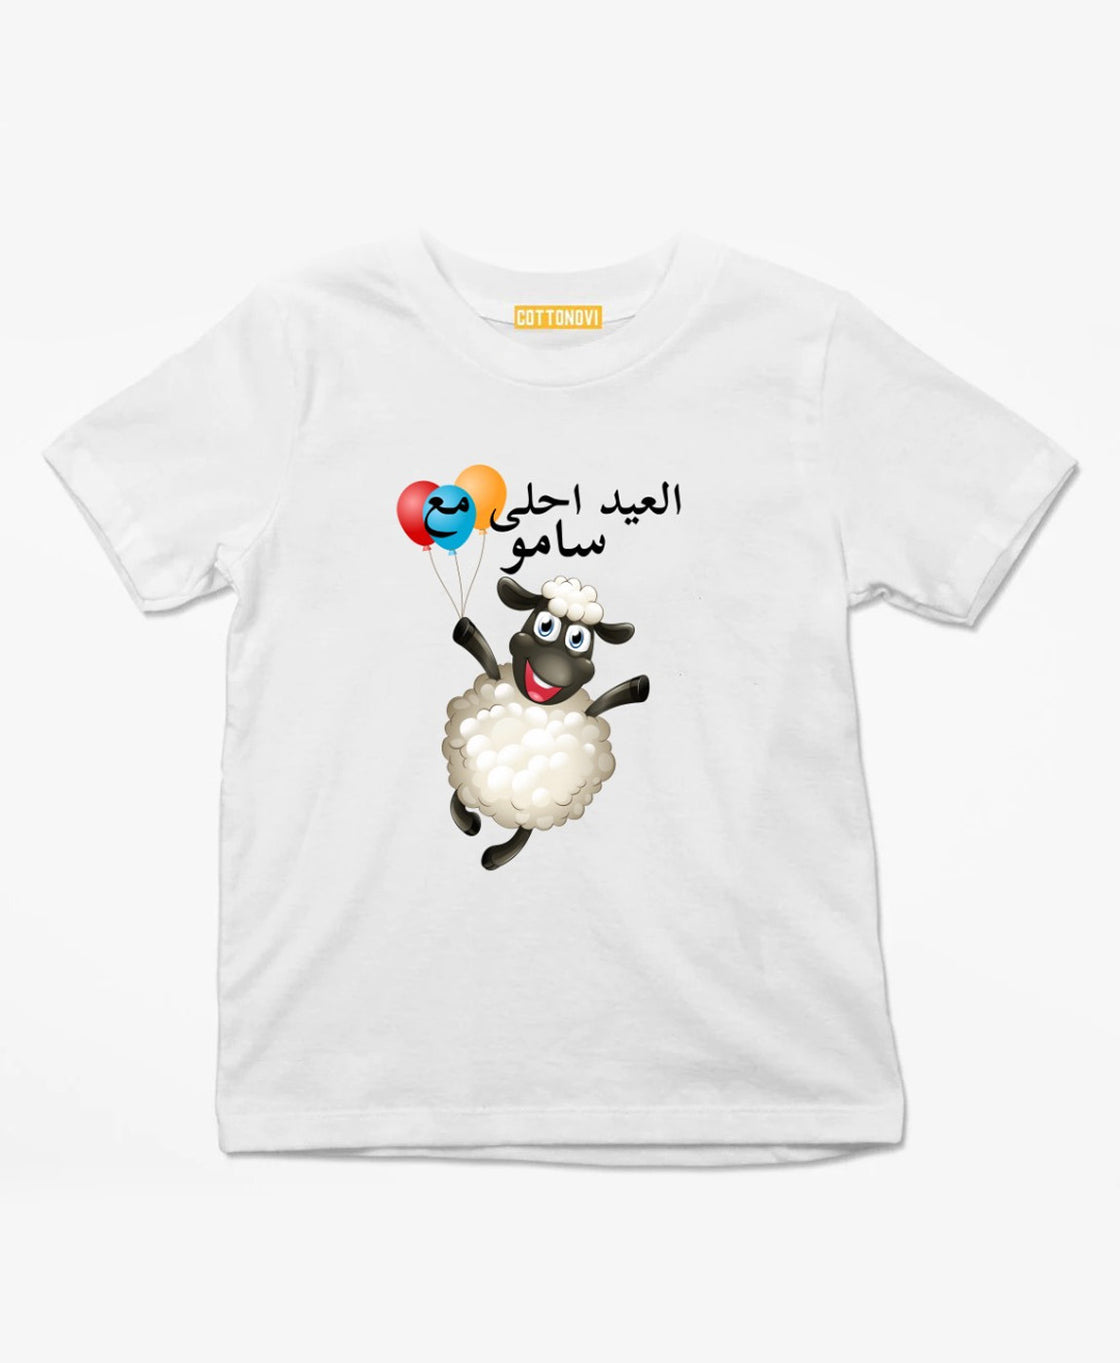 Best Eid customized t-shirt 2023 #Balloons ( Design 5343 + Name )